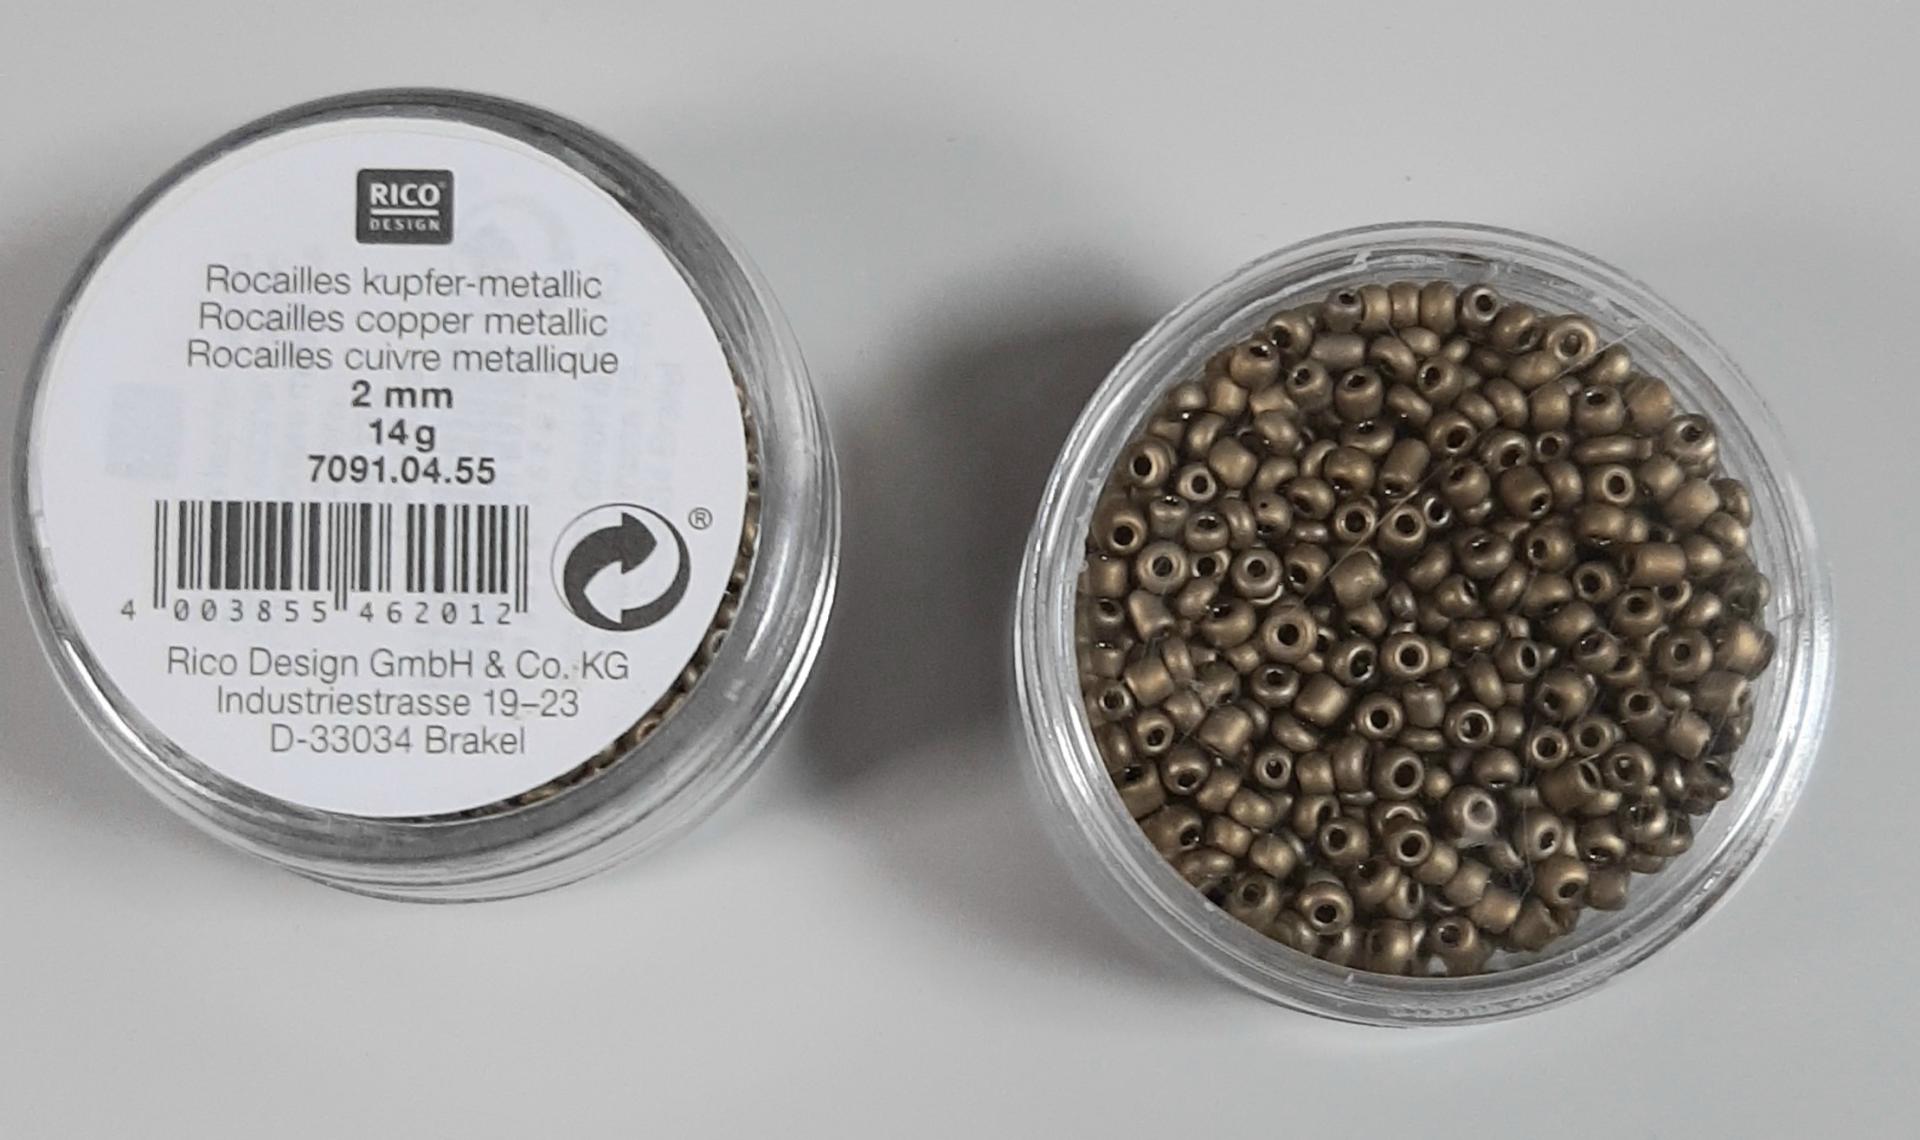 Perles de rocailles cuivre metallique 2mm rico design 7091 04 55